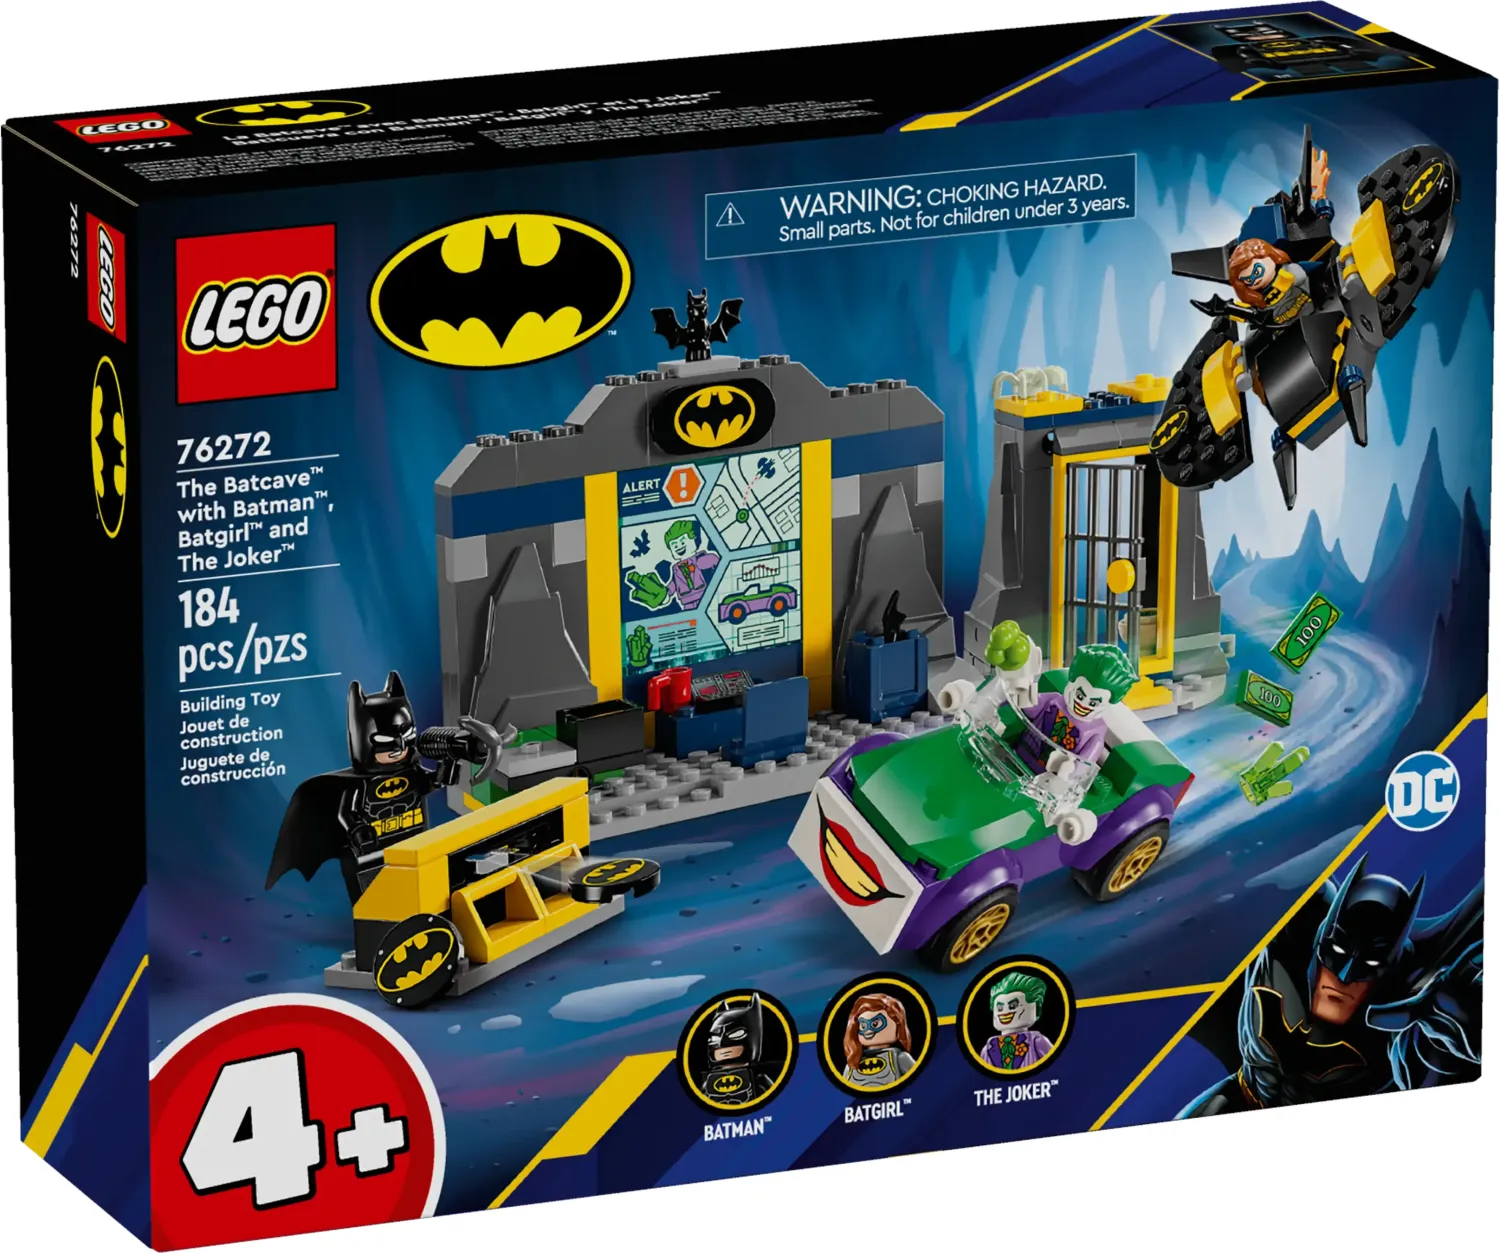 Bathöhle mit Batman, Batgirl und Joker